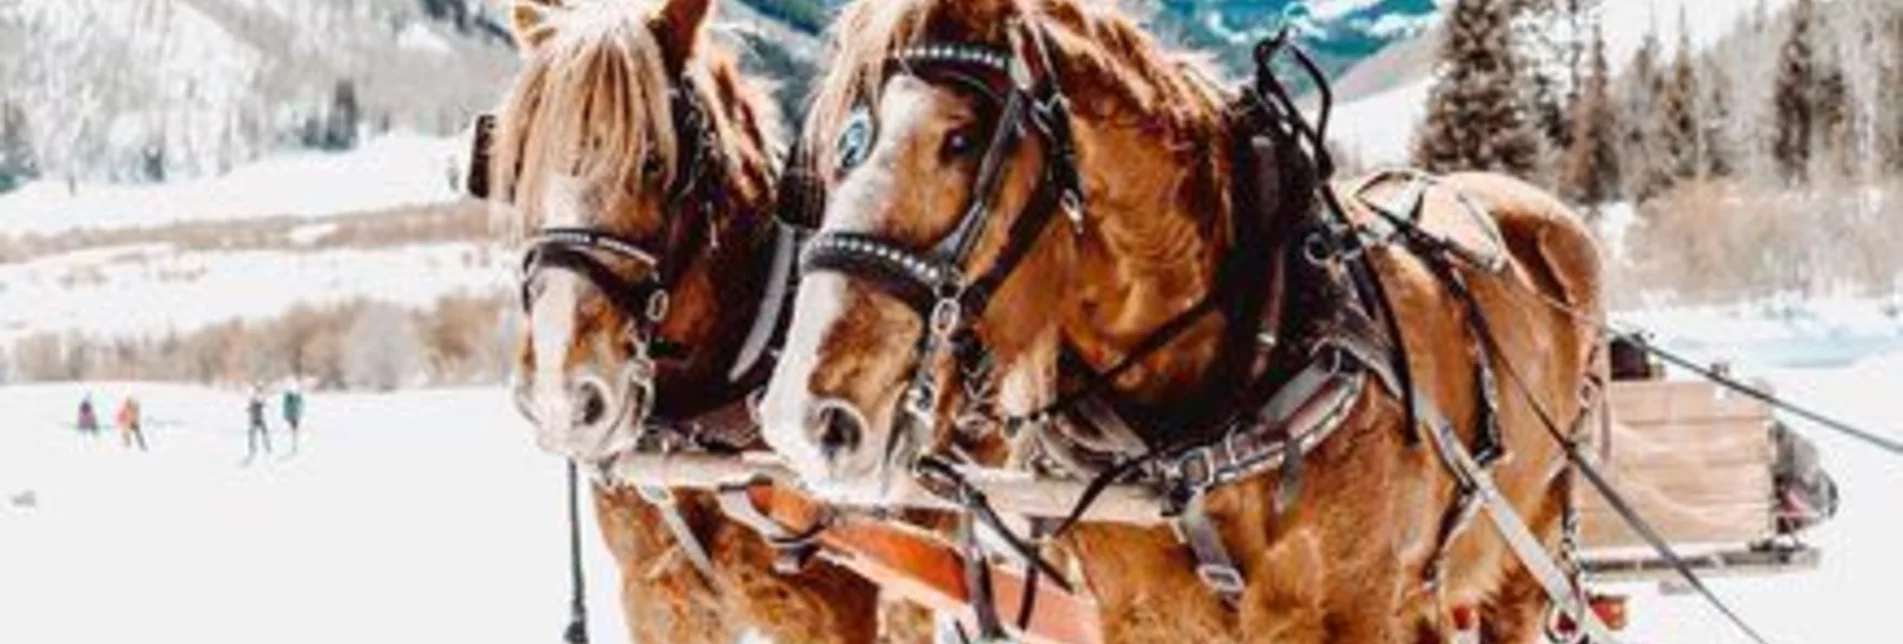 Horse Carriage Ride Horse Drawn Sleigh Rides Goglhof - Touren-Impression #1